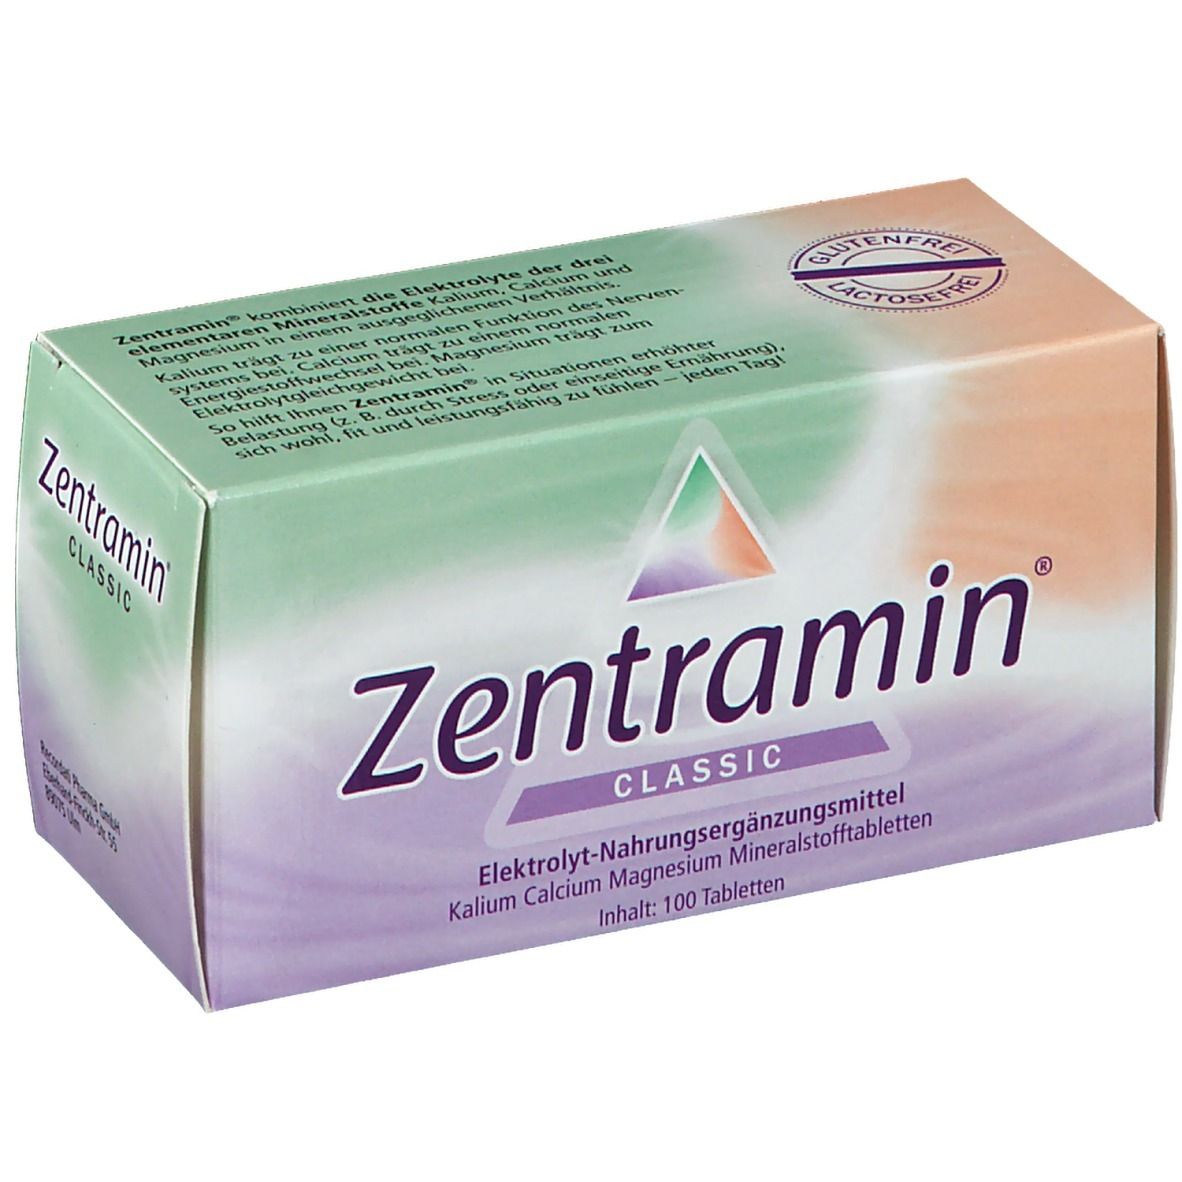 Zentramin® classic Tabletten